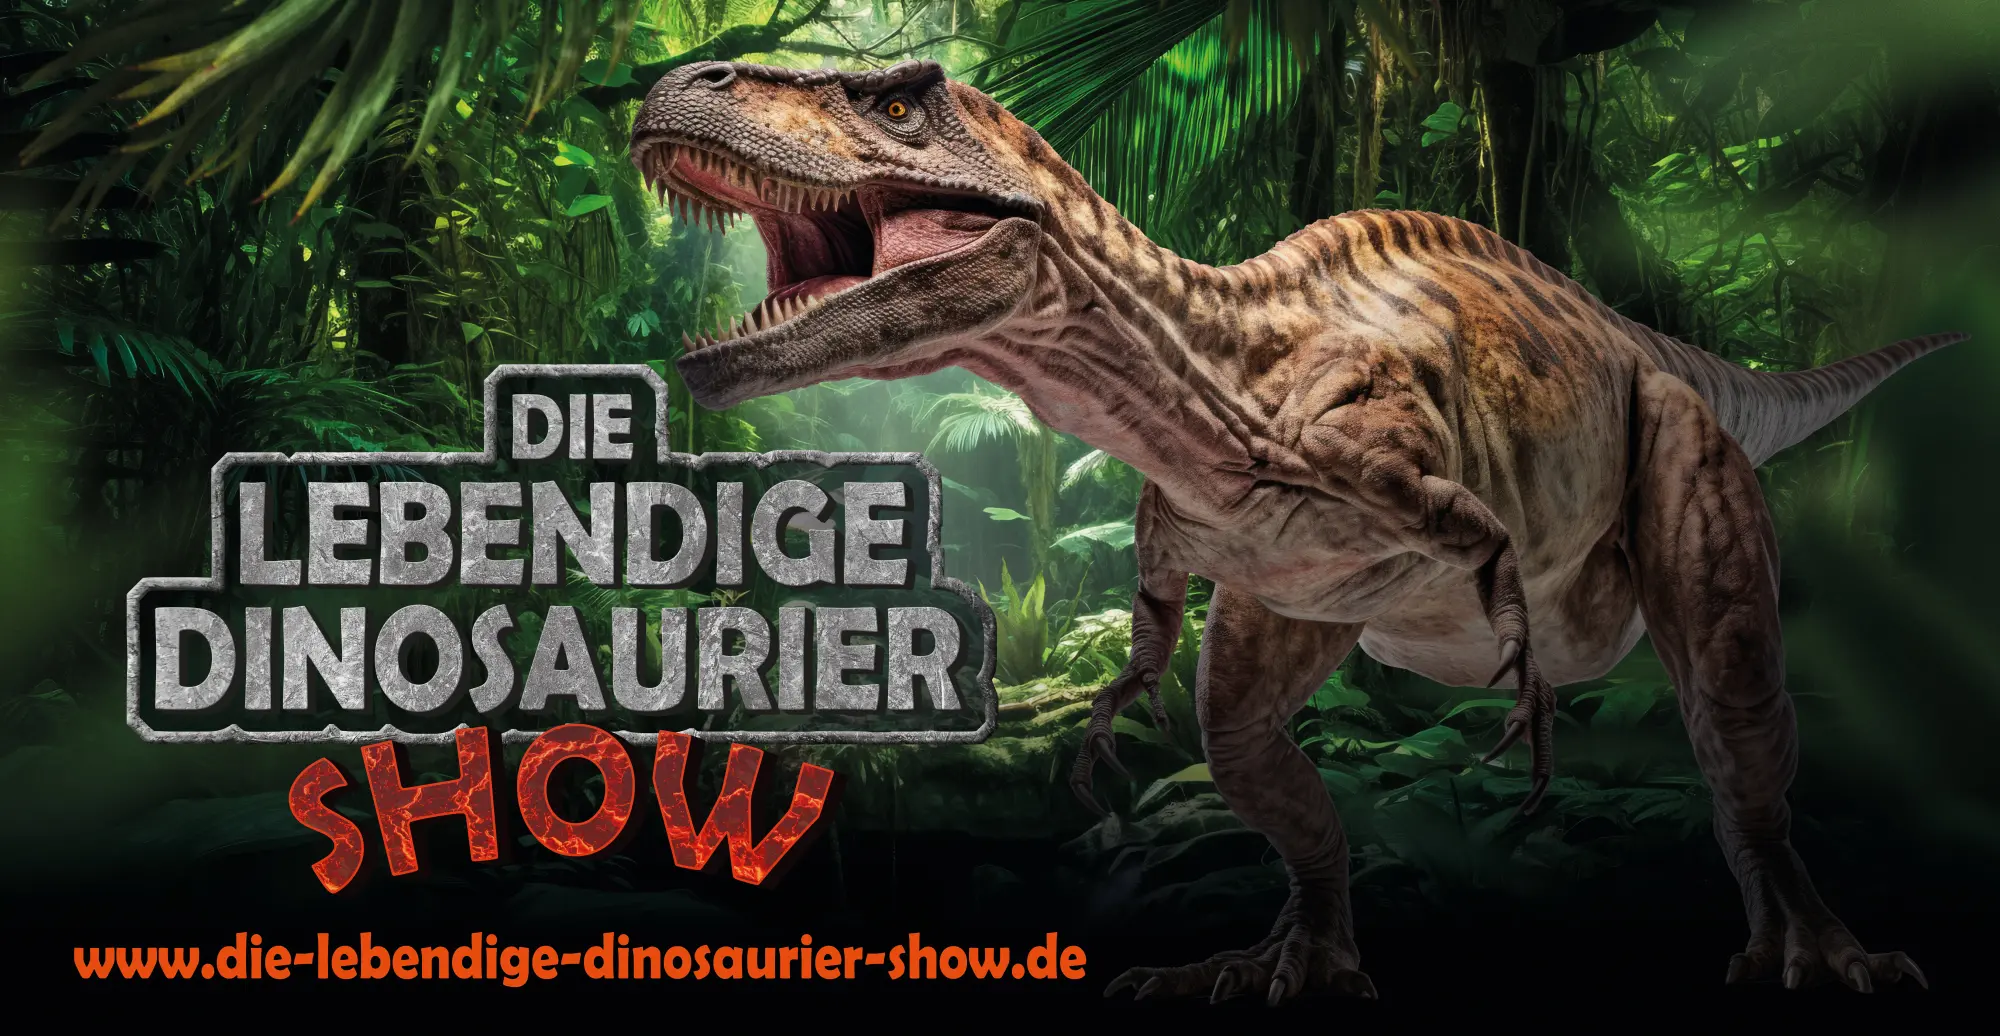 Die lebendige Dinosaurier Show, poster